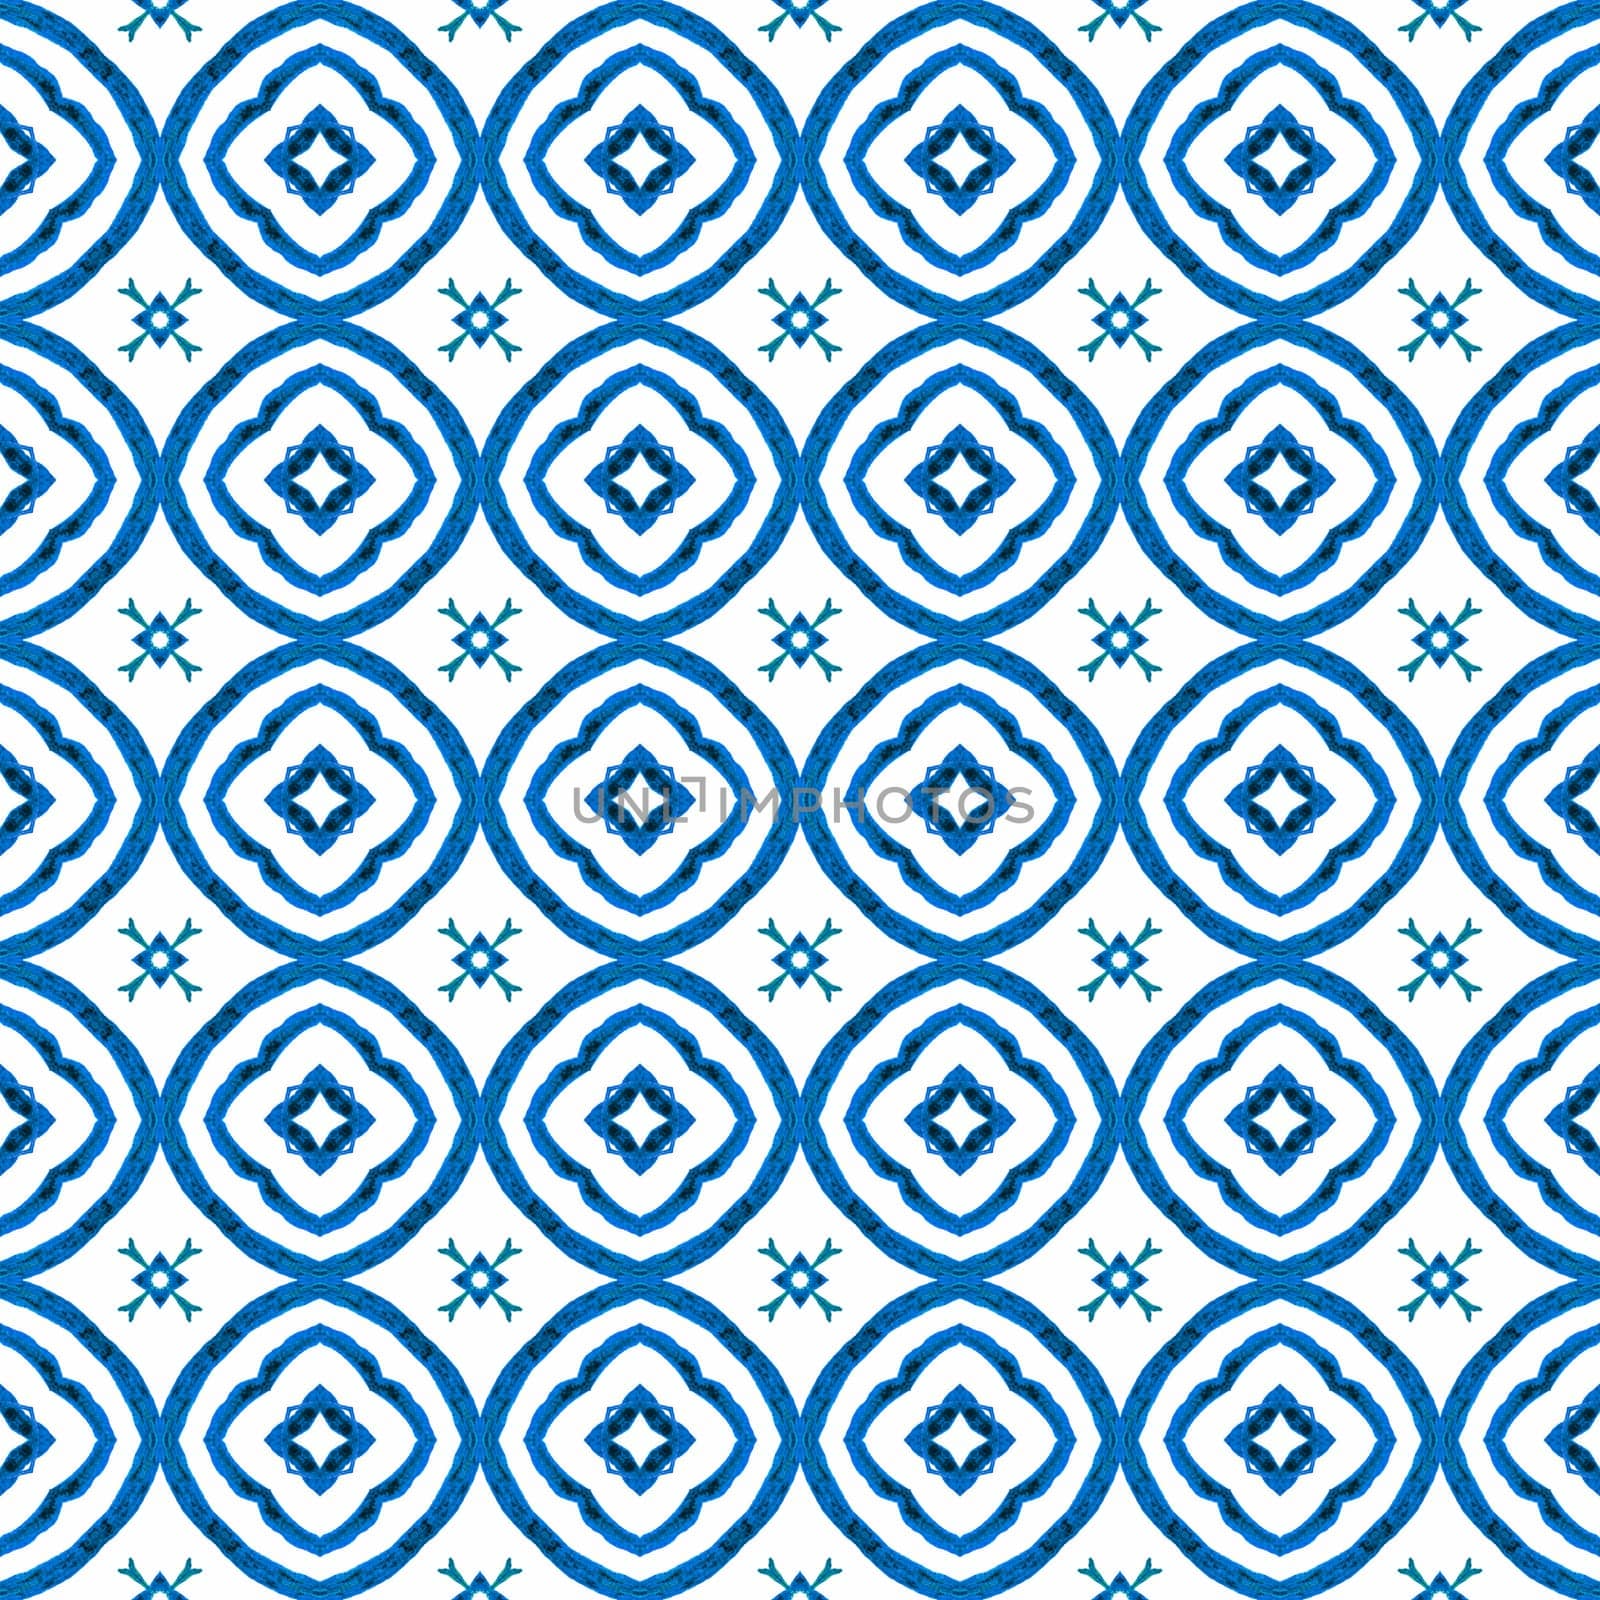 Mosaic seamless pattern. Blue imaginative boho by beginagain